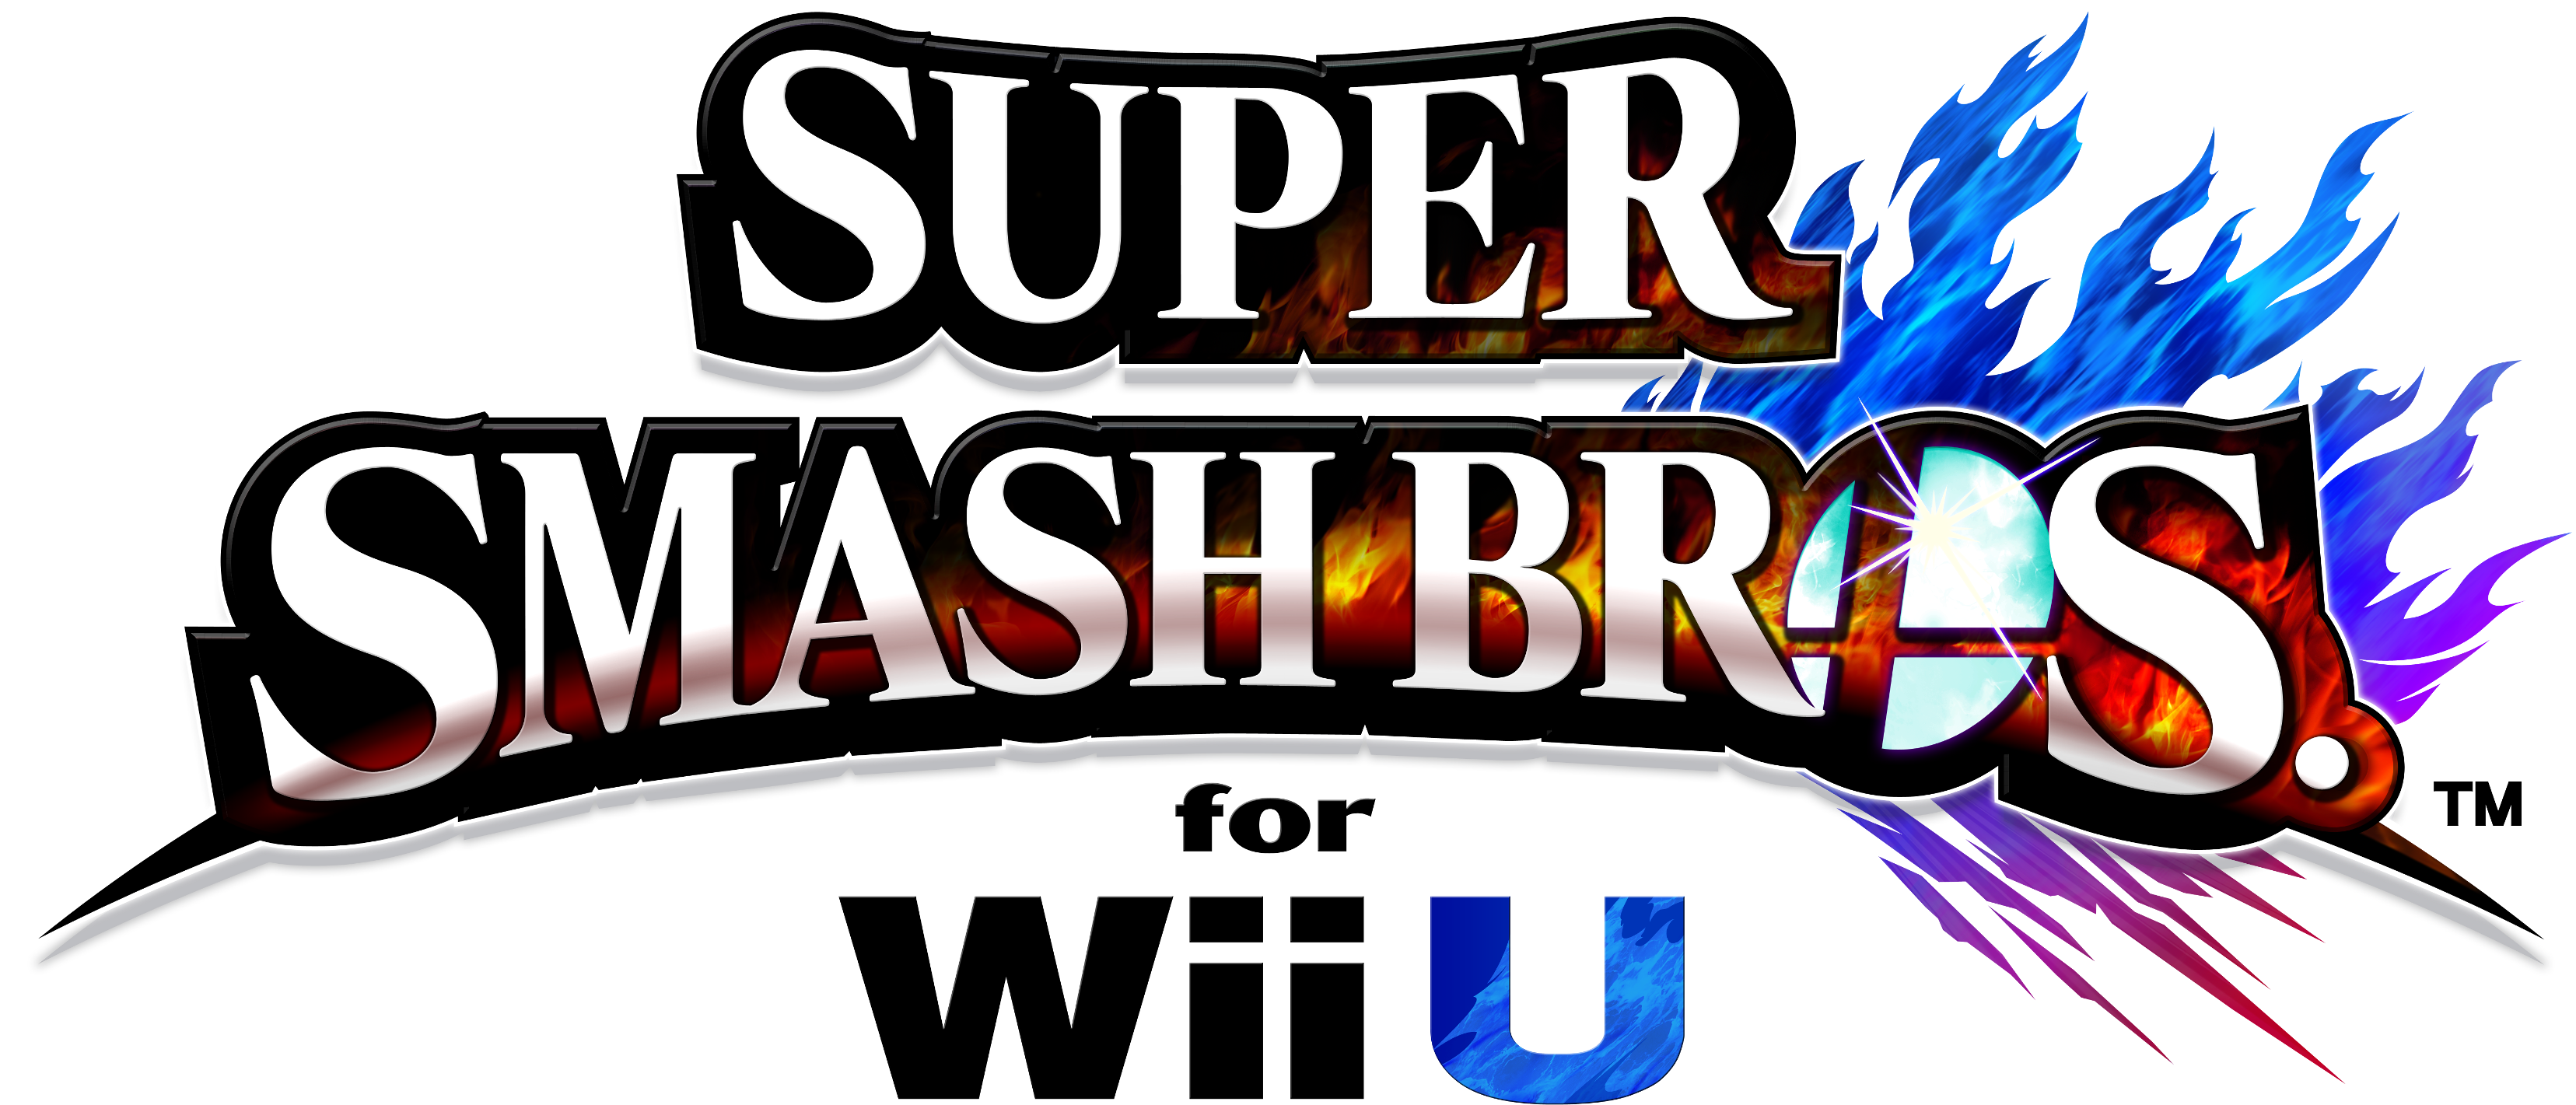 General Rules For Smash - Super Smash Bros Wii U Title (3312x1421)